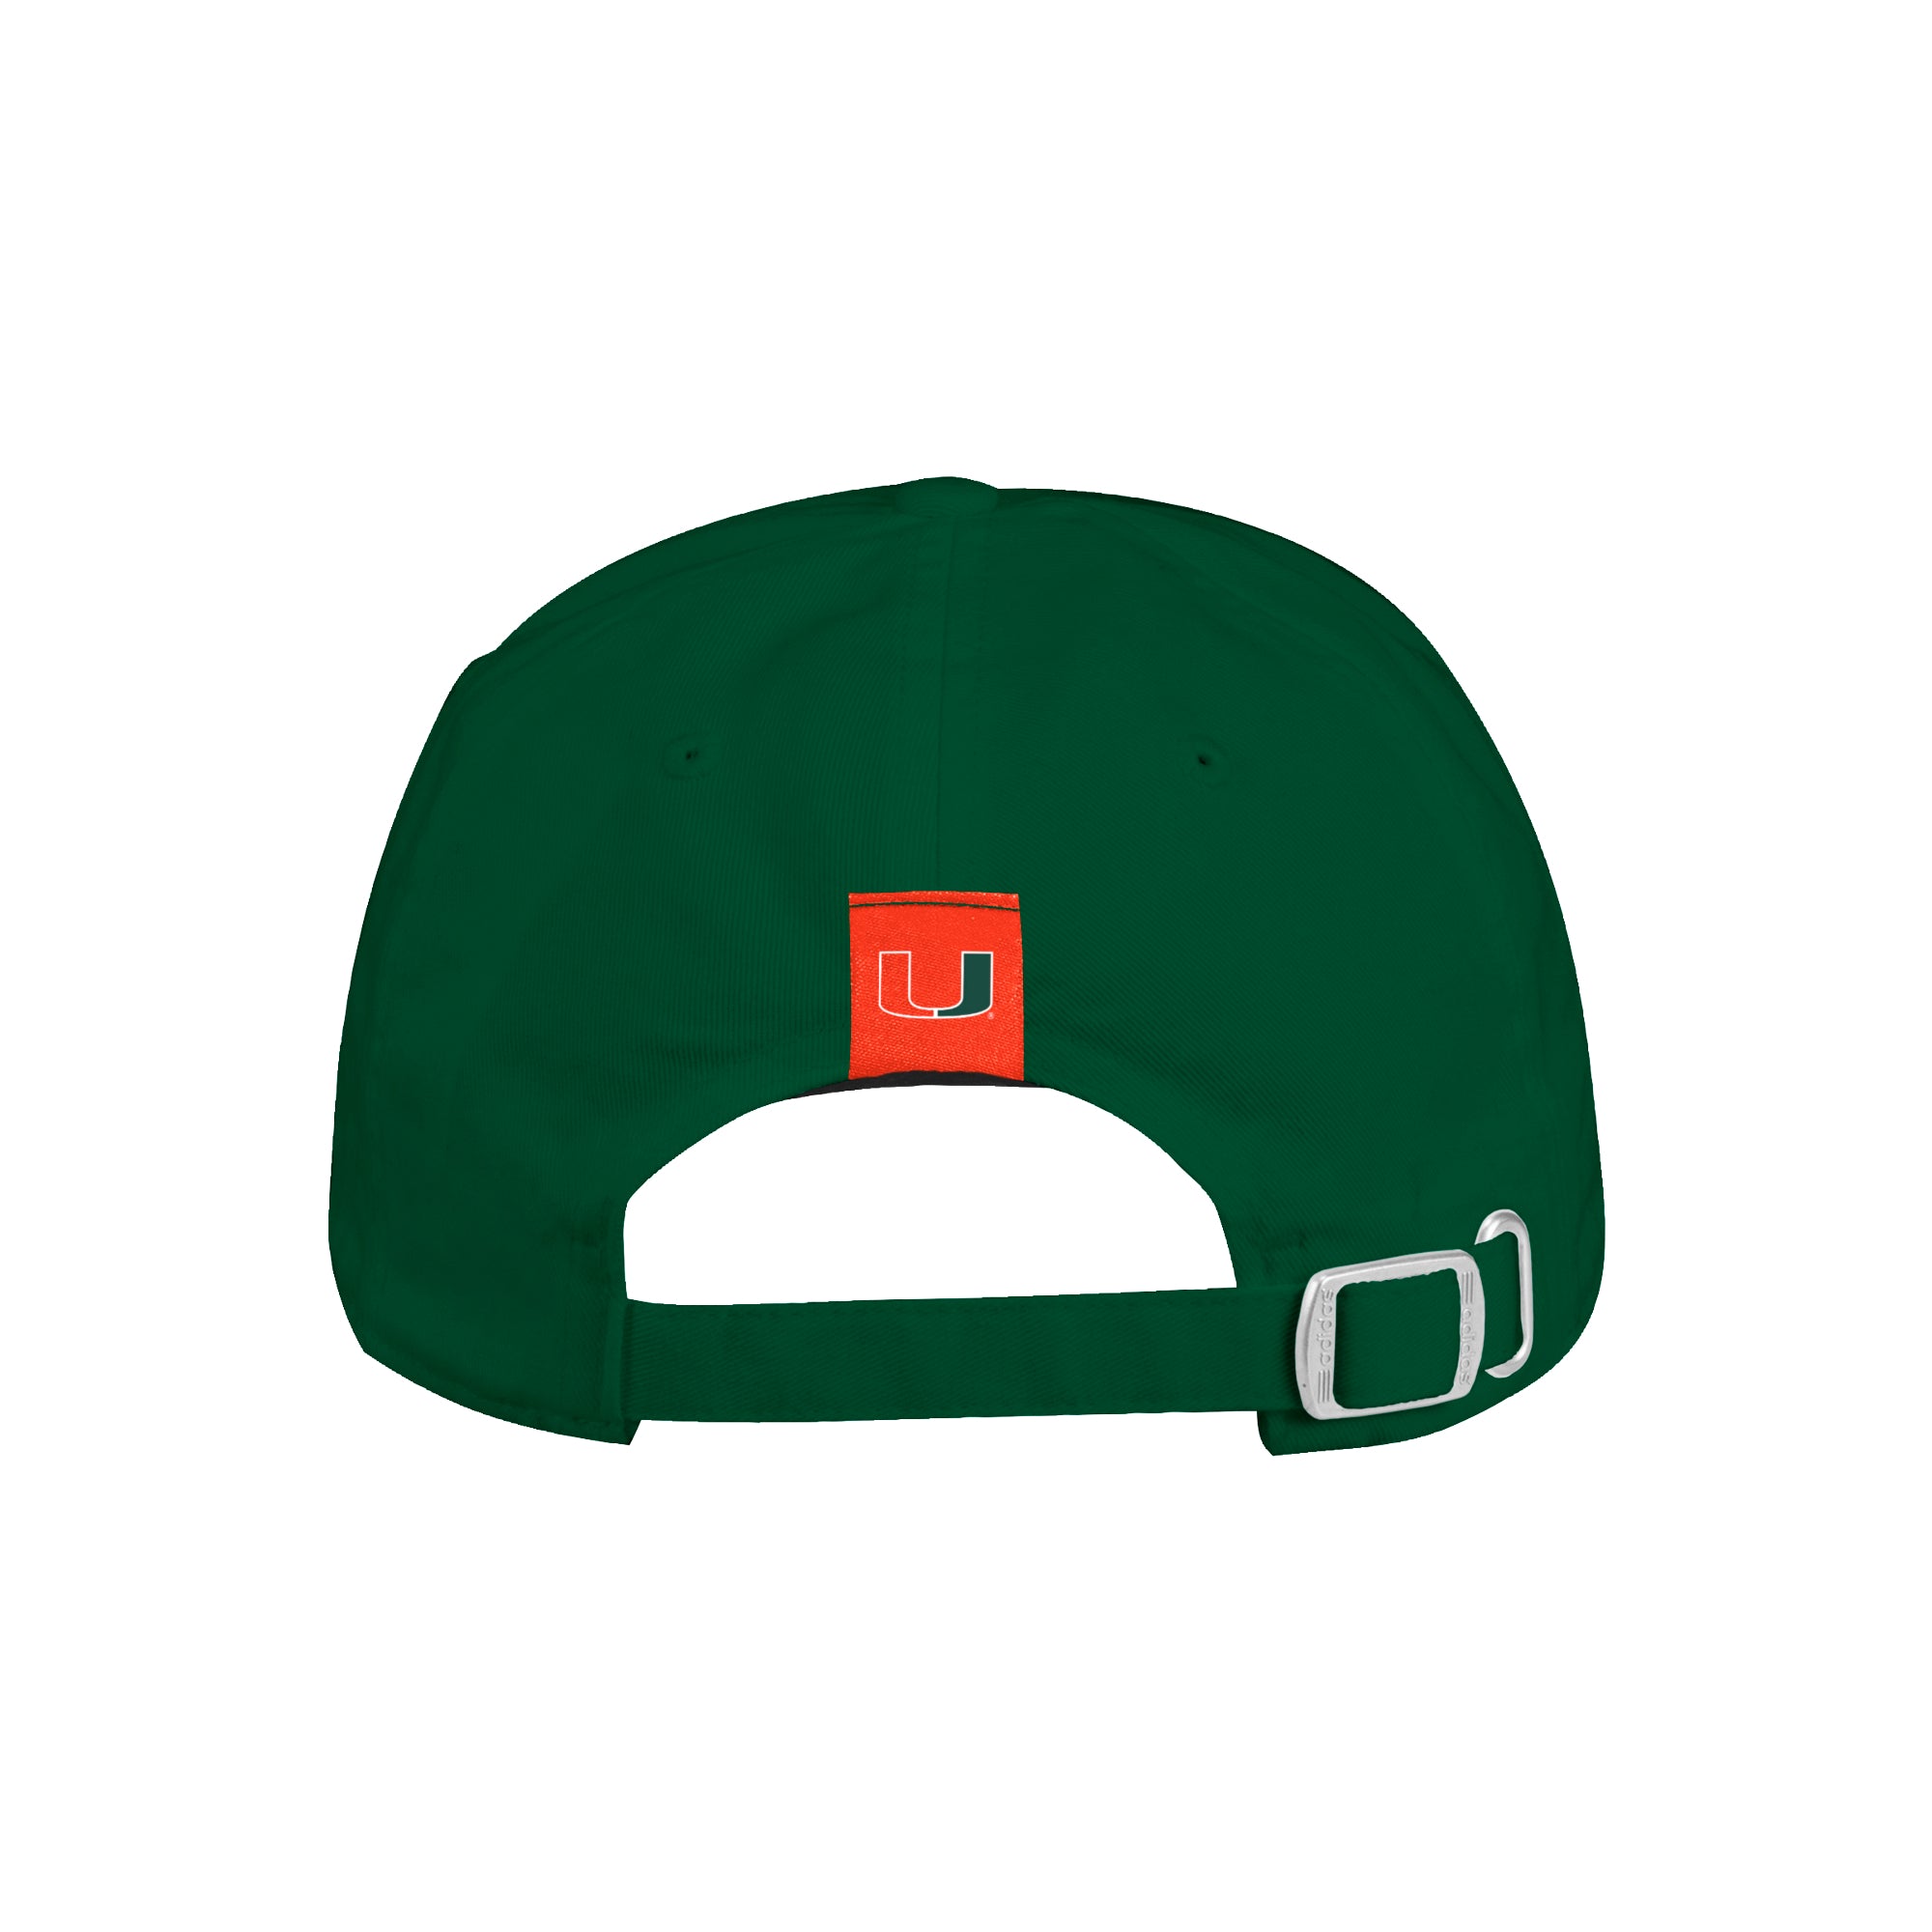 Miami Hurricanes adidas Miami Baseball Slouch Adjustable Hat - Green